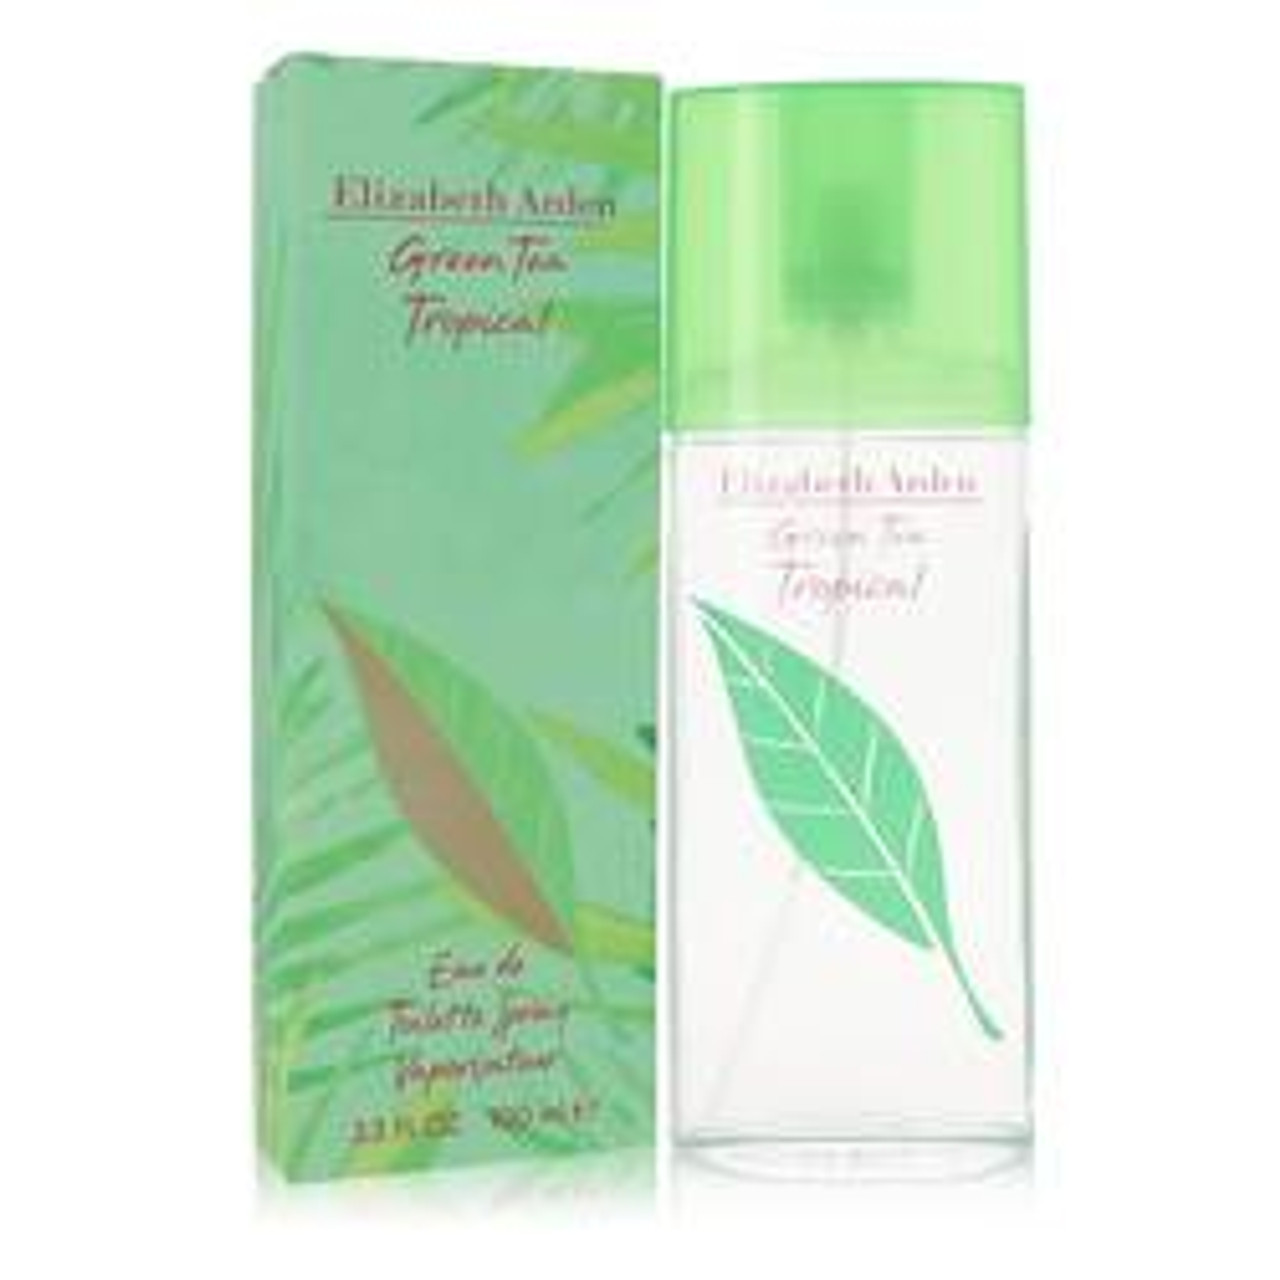 Green Tea Tropical Perfume By Elizabeth Arden Eau De Toilette Spray 3.3 oz for Women - [From 39.00 - Choose pk Qty ] - *Ships from Miami